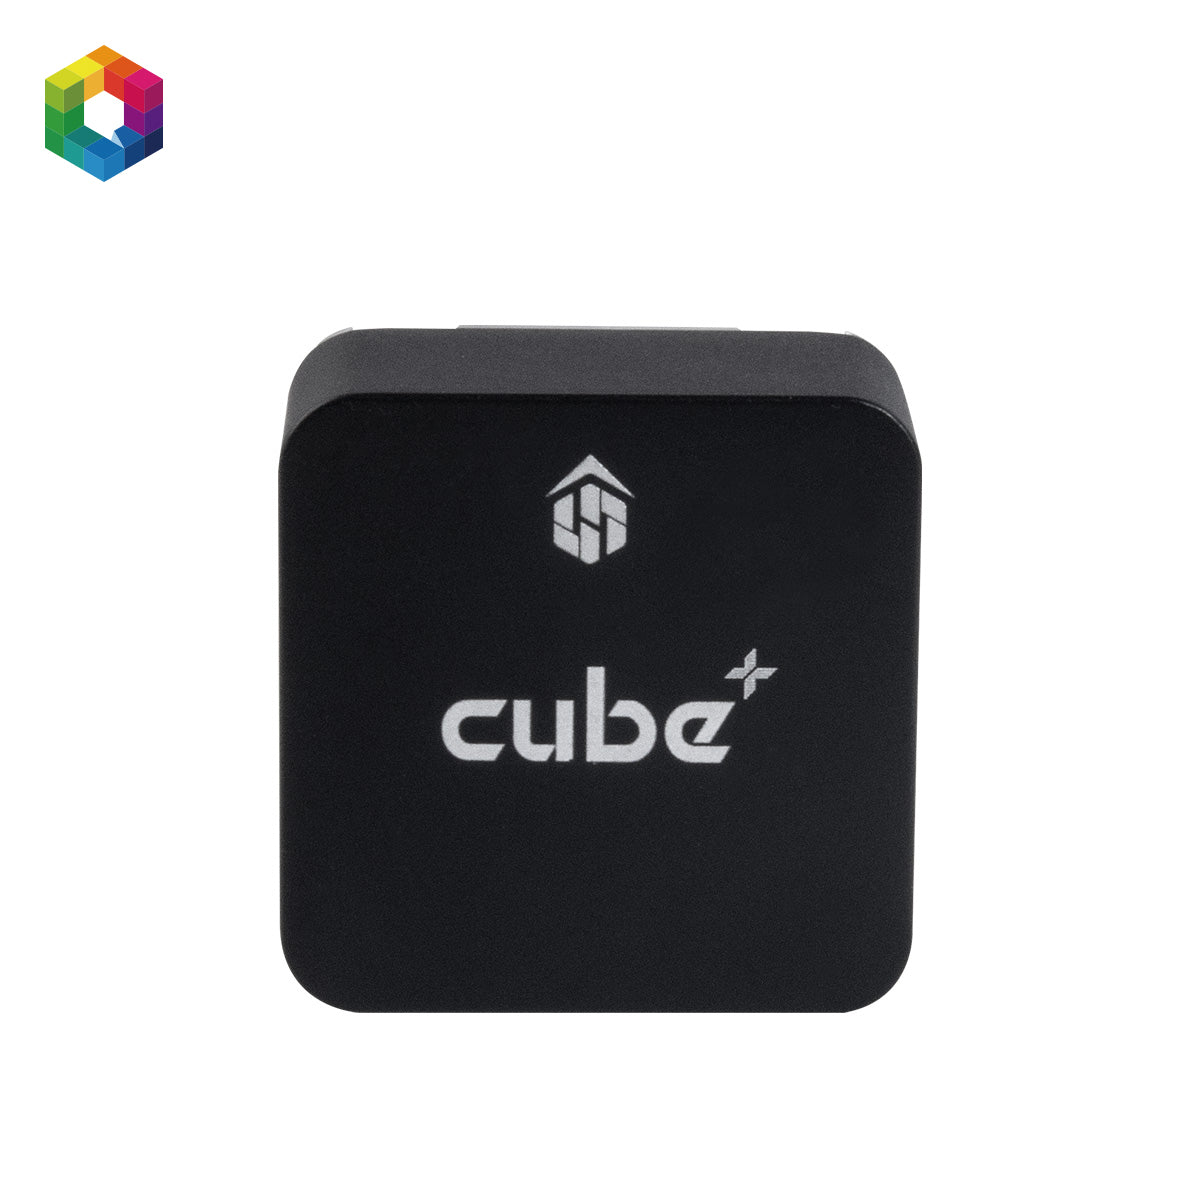 The Cube Black+